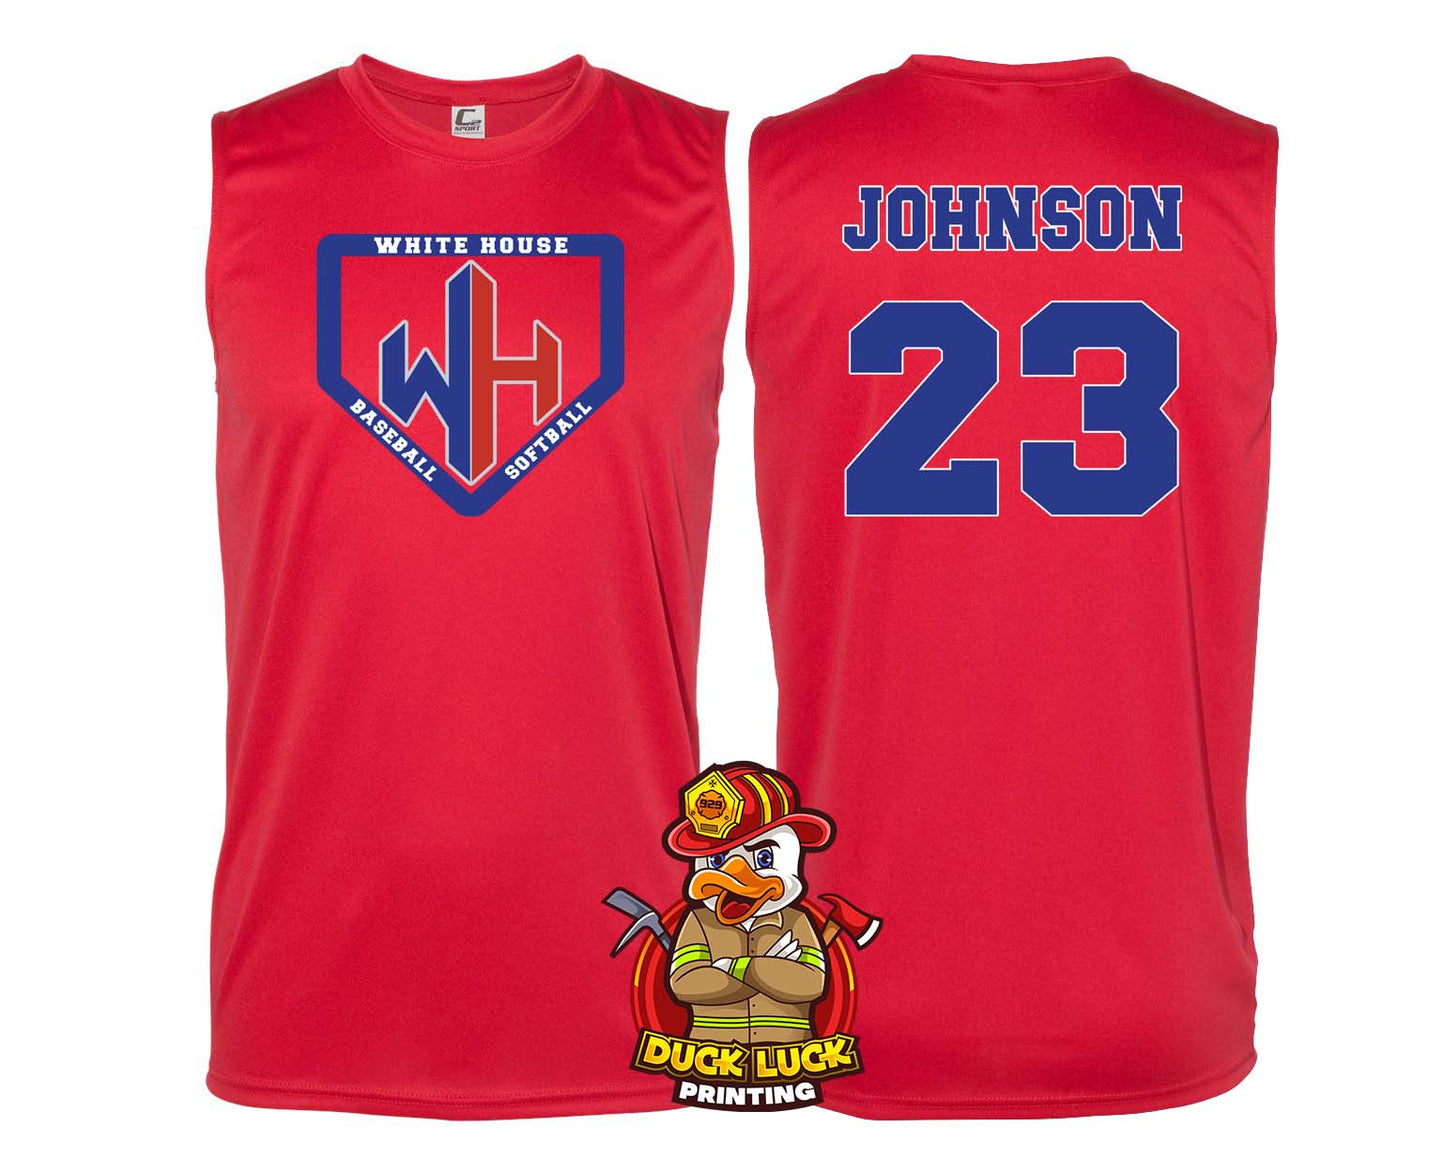 PREORDER - Whitehouse Softball/Baseball Shirts